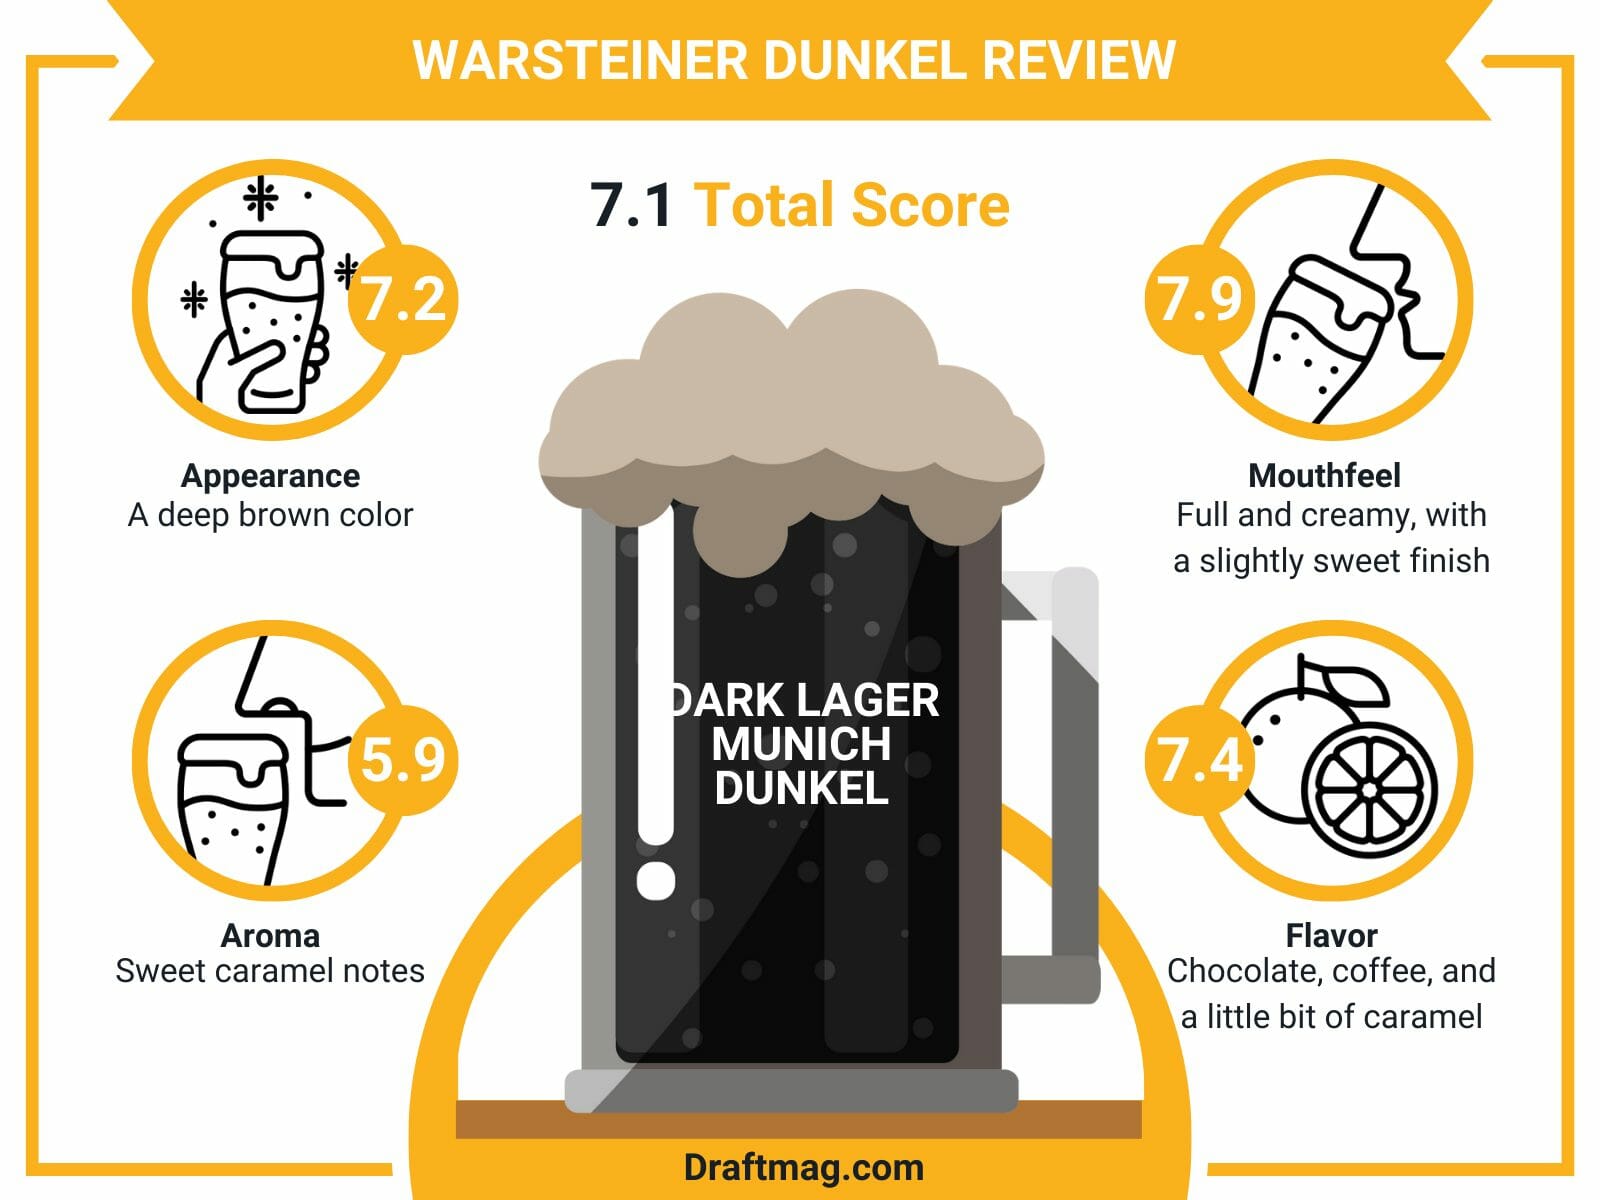 Warsteiner dunkel review infographic